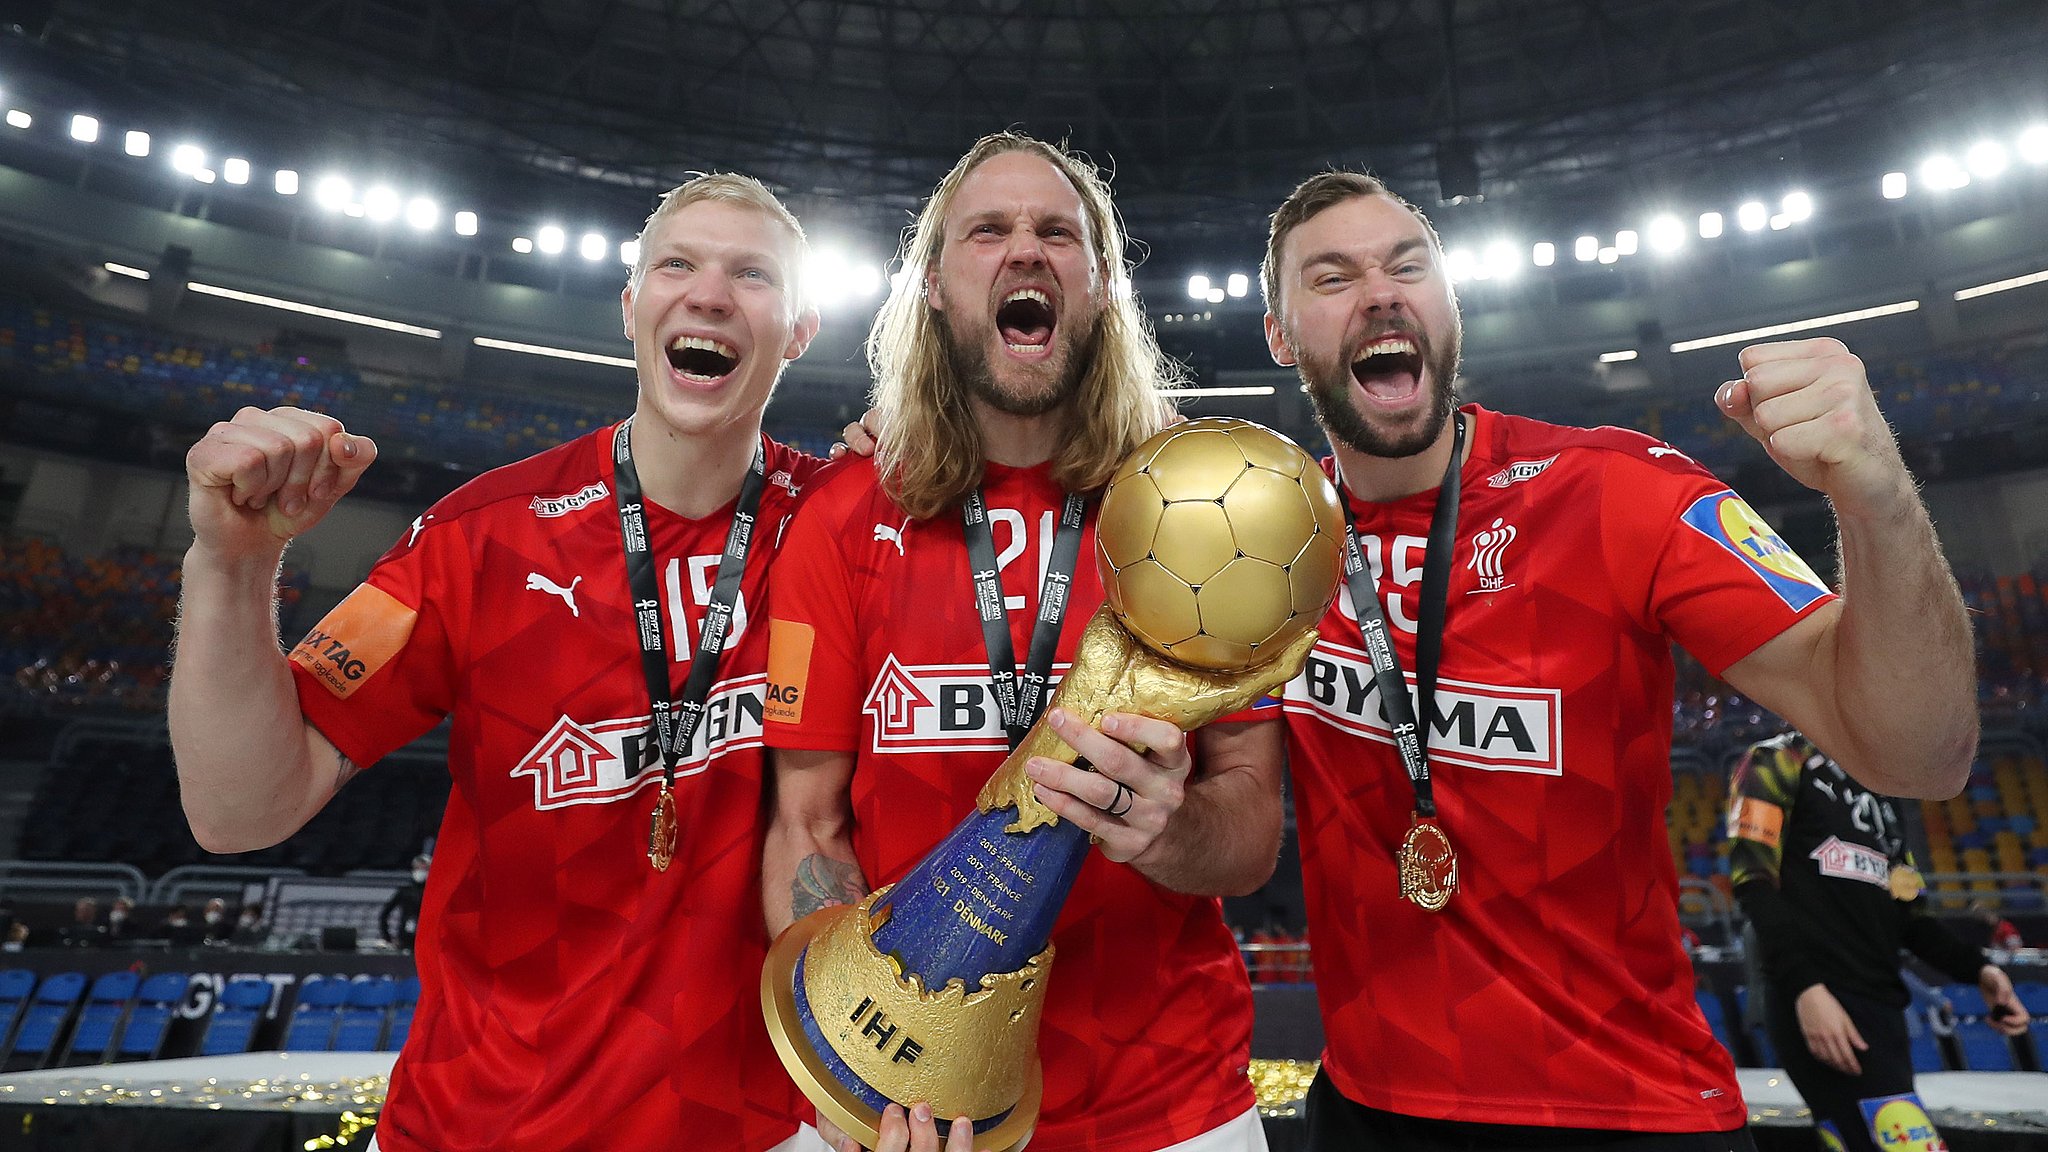 Guld-rus i Hele VM-guldvindere for Aalborg | TV2 Nord